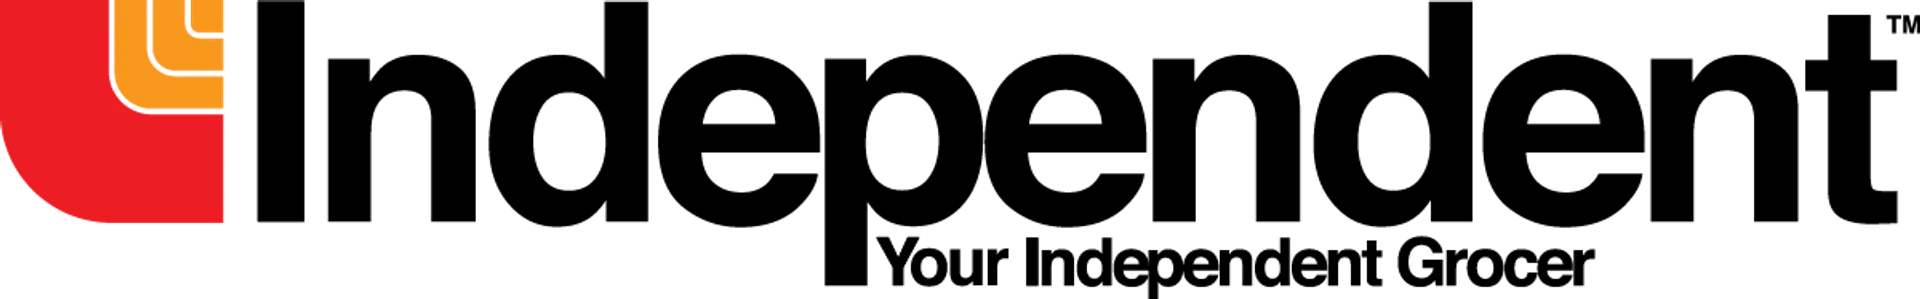 INDEPENDENT logo